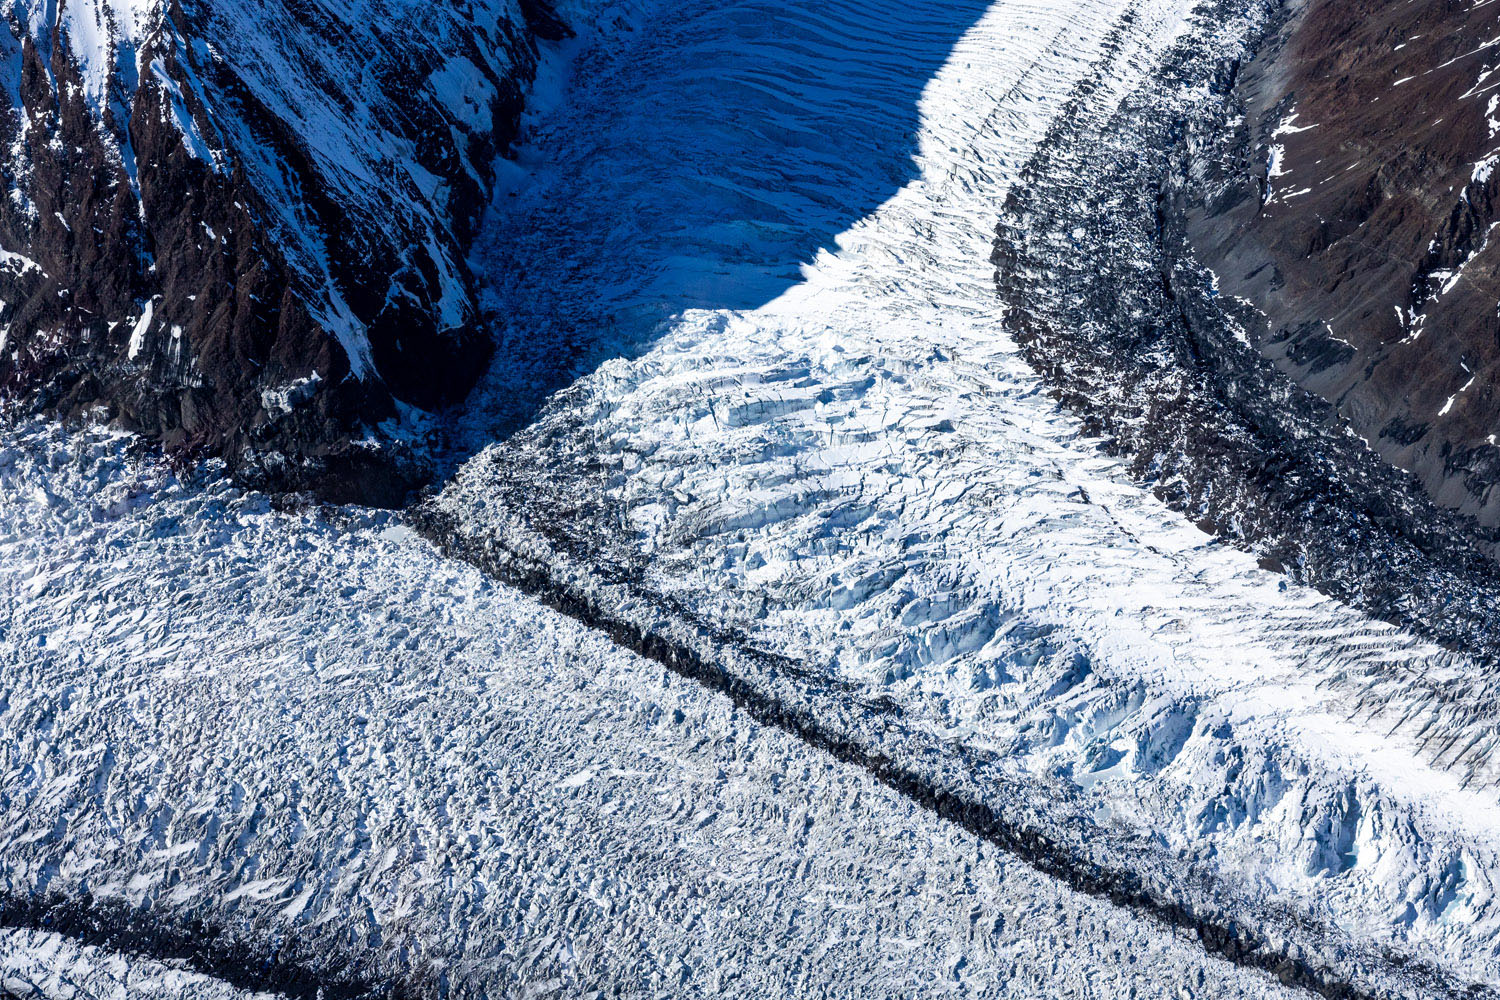 Muldrow Glacier flows down the northeastern face of Denali.